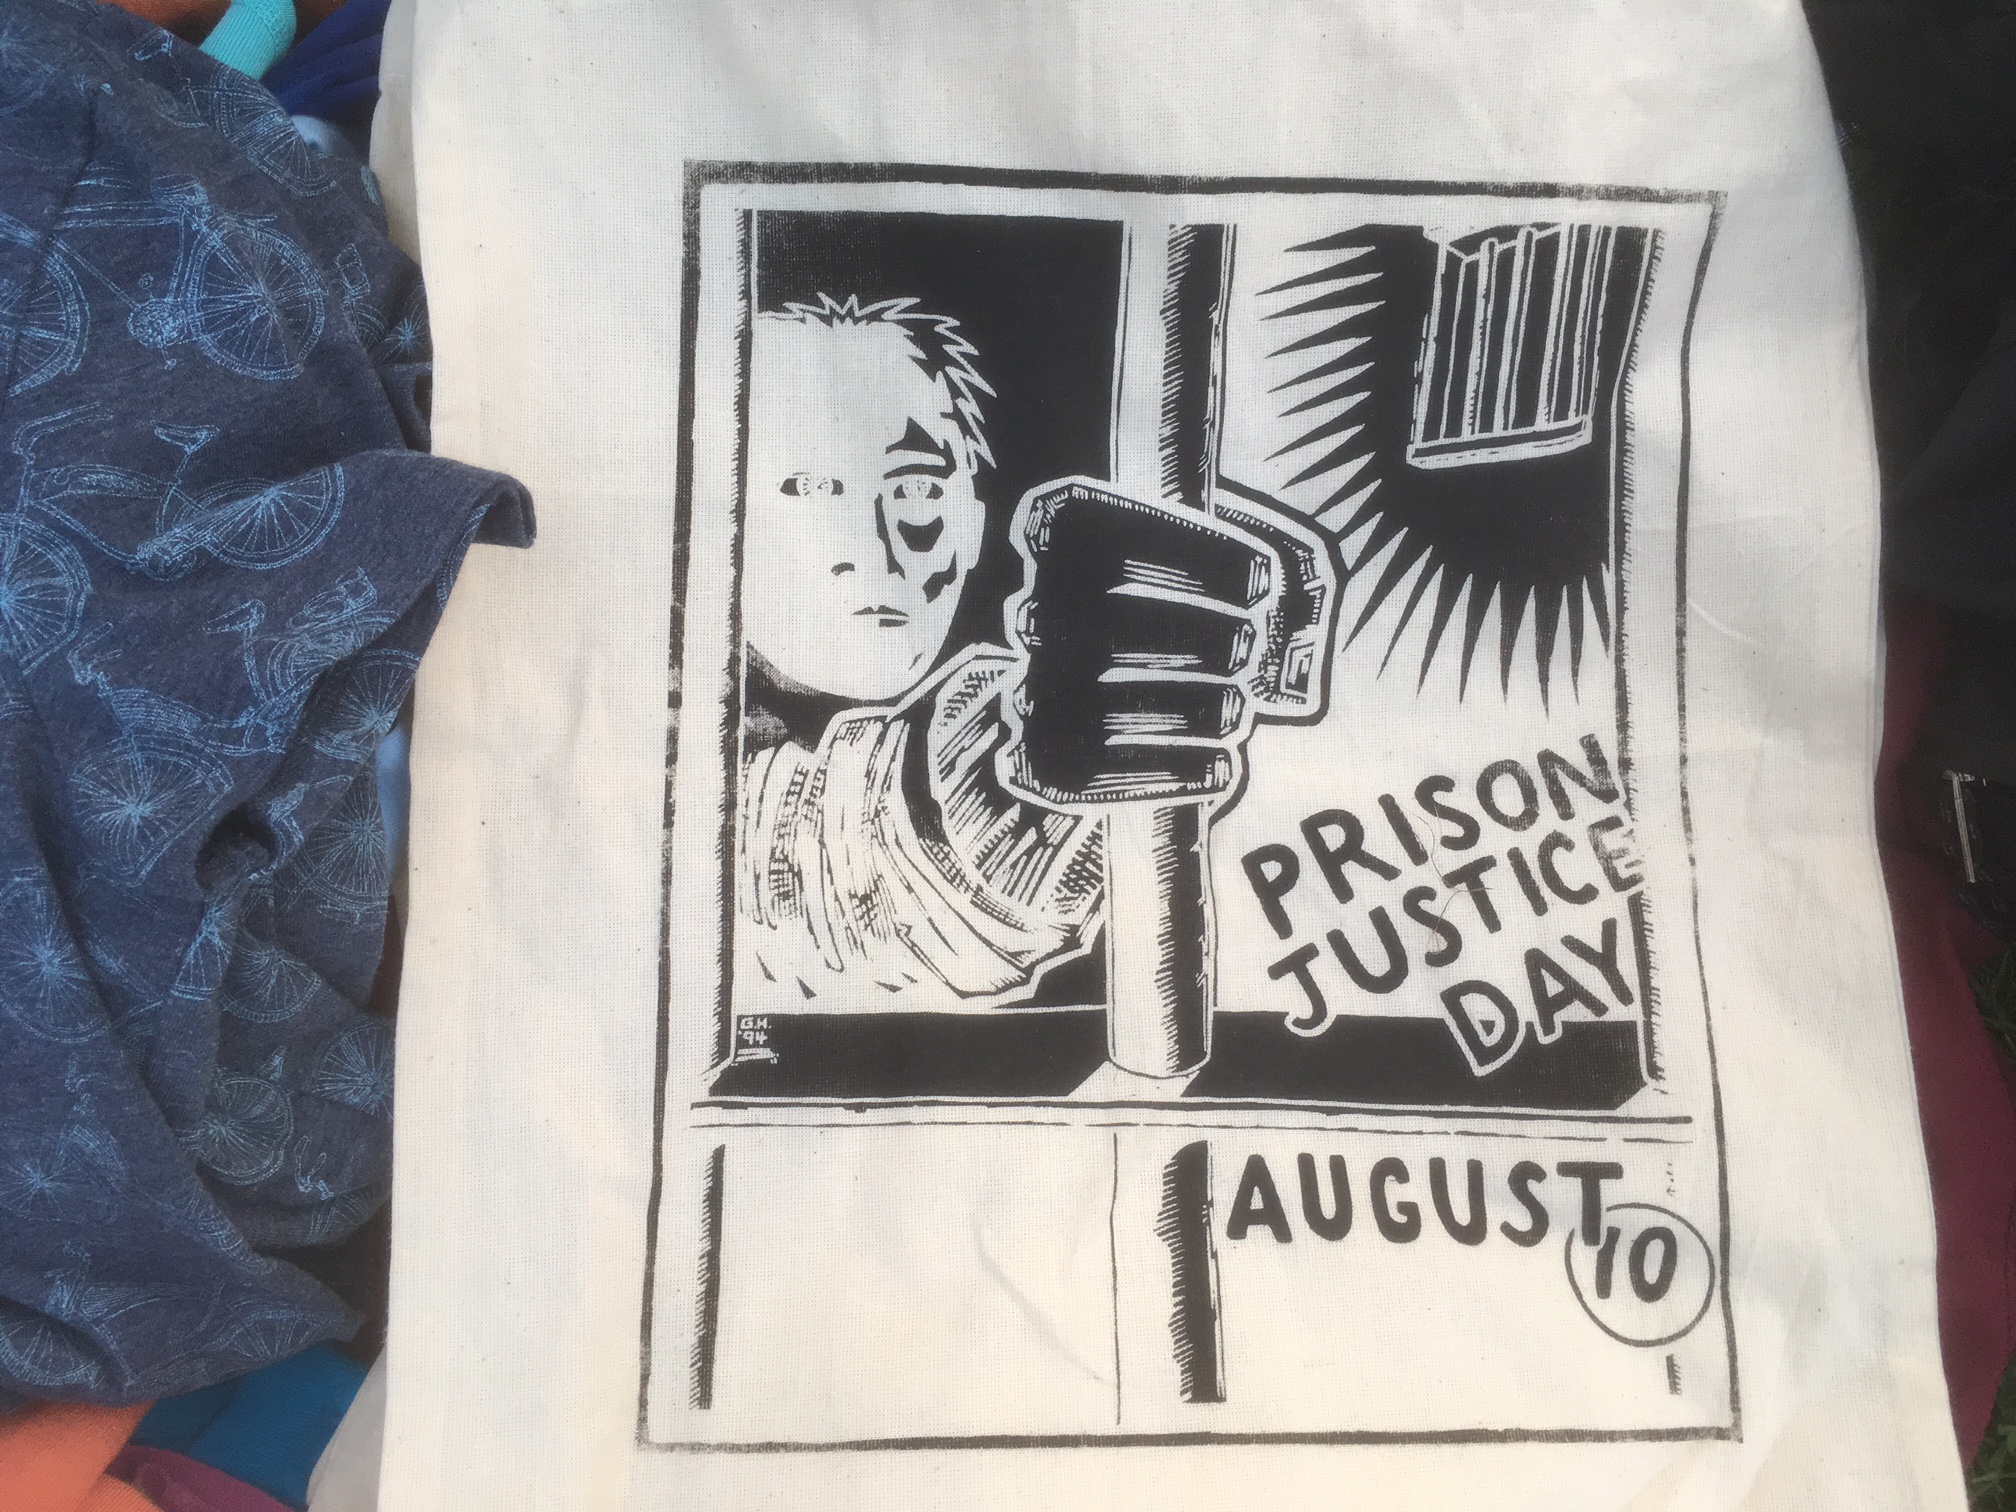 Prison justice day - August 10, 2017 (5).JPG